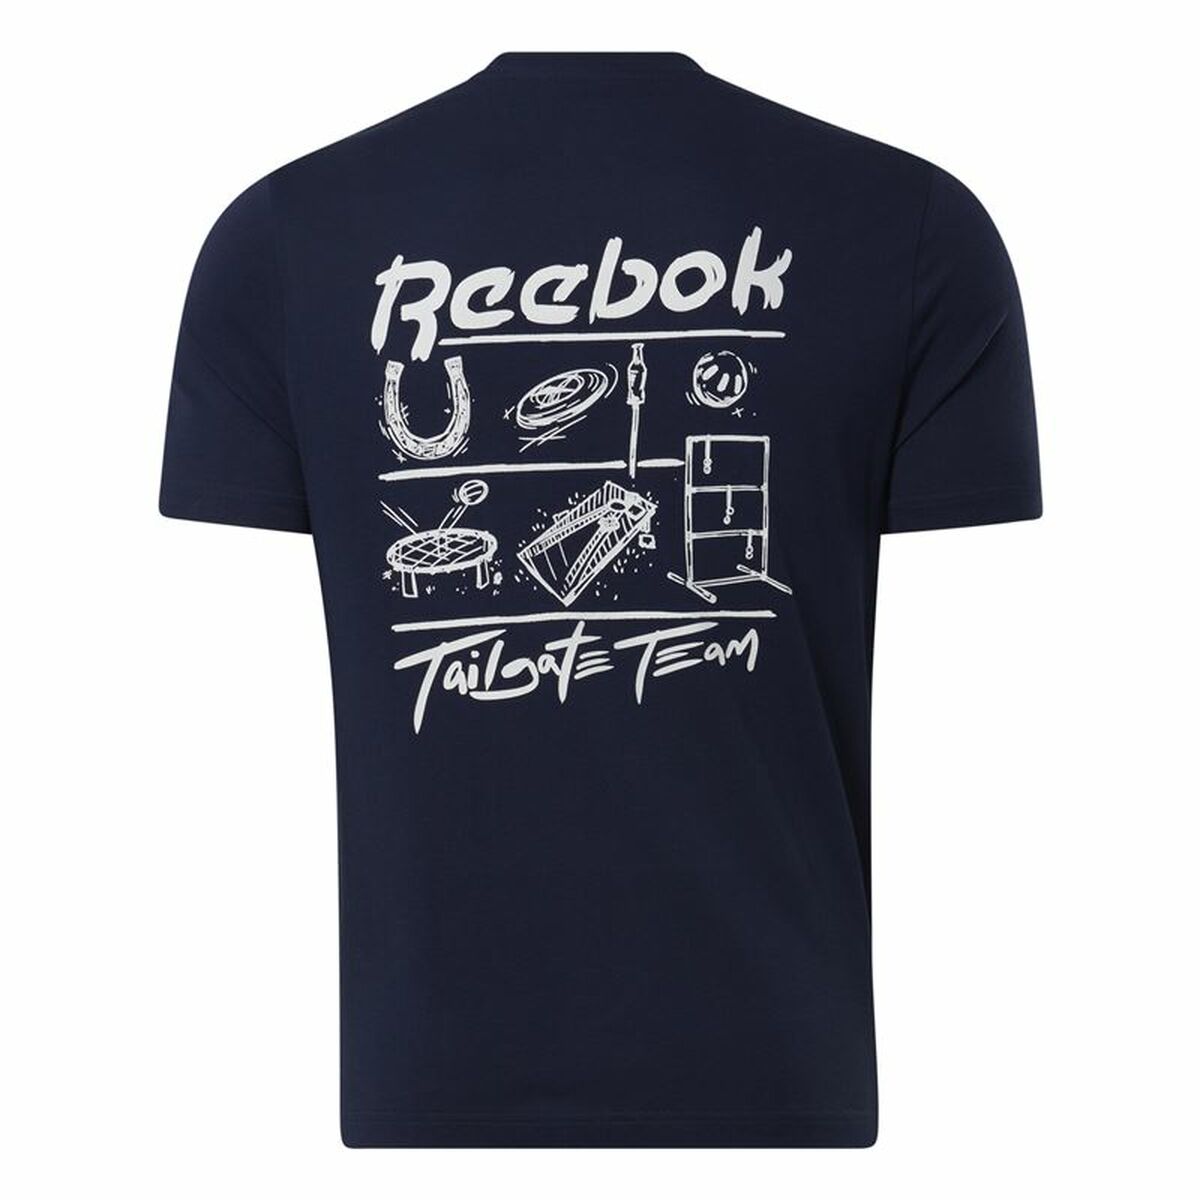 Men’s Short Sleeve T-Shirt Reebok GS Tailgate Team Dark blue